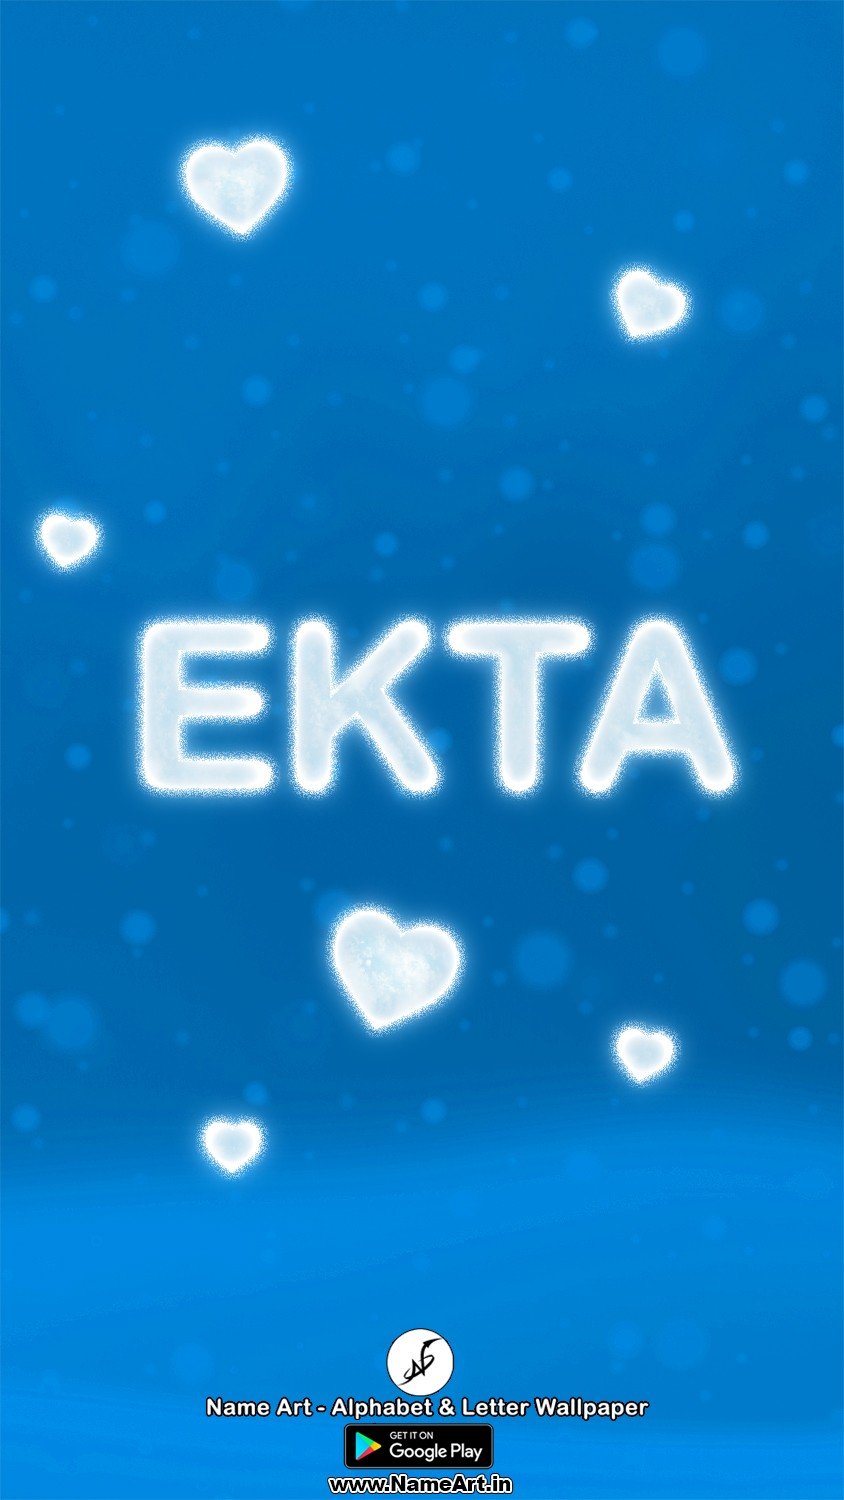 Ekta | Whatsapp Status Ekta || Happy Birthday To You !! | Ekta Whatsapp Status images |